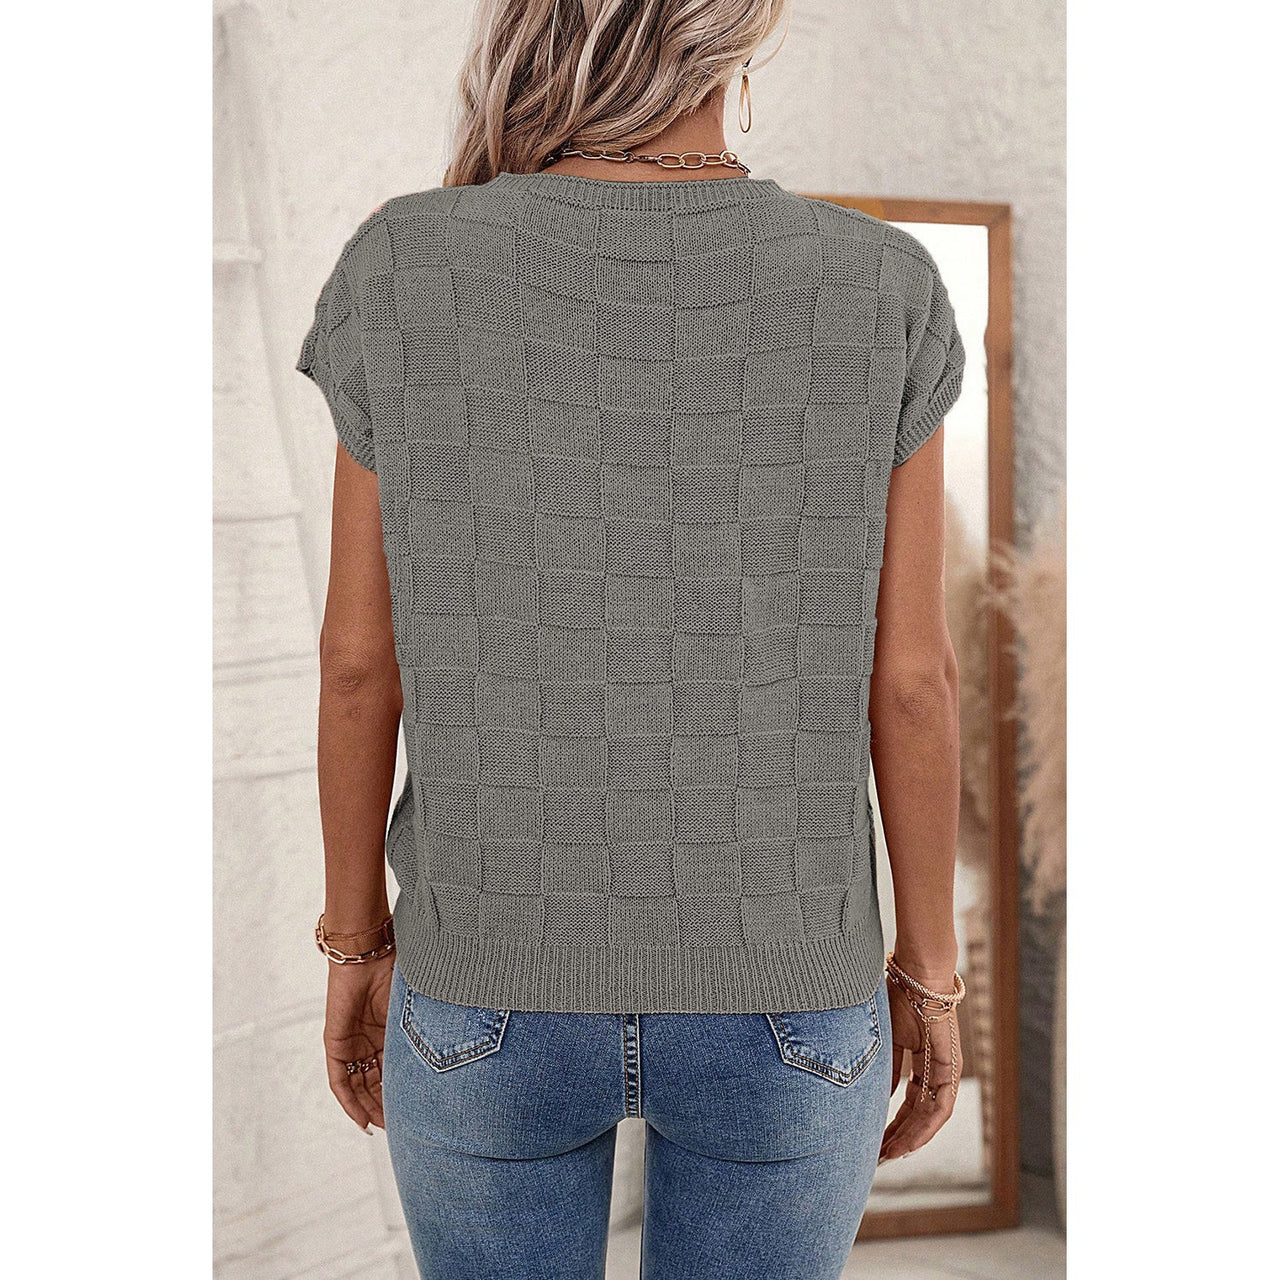 Dear Lover Women's Lattice Textured Knit Short Sleeve Sweater - Grey